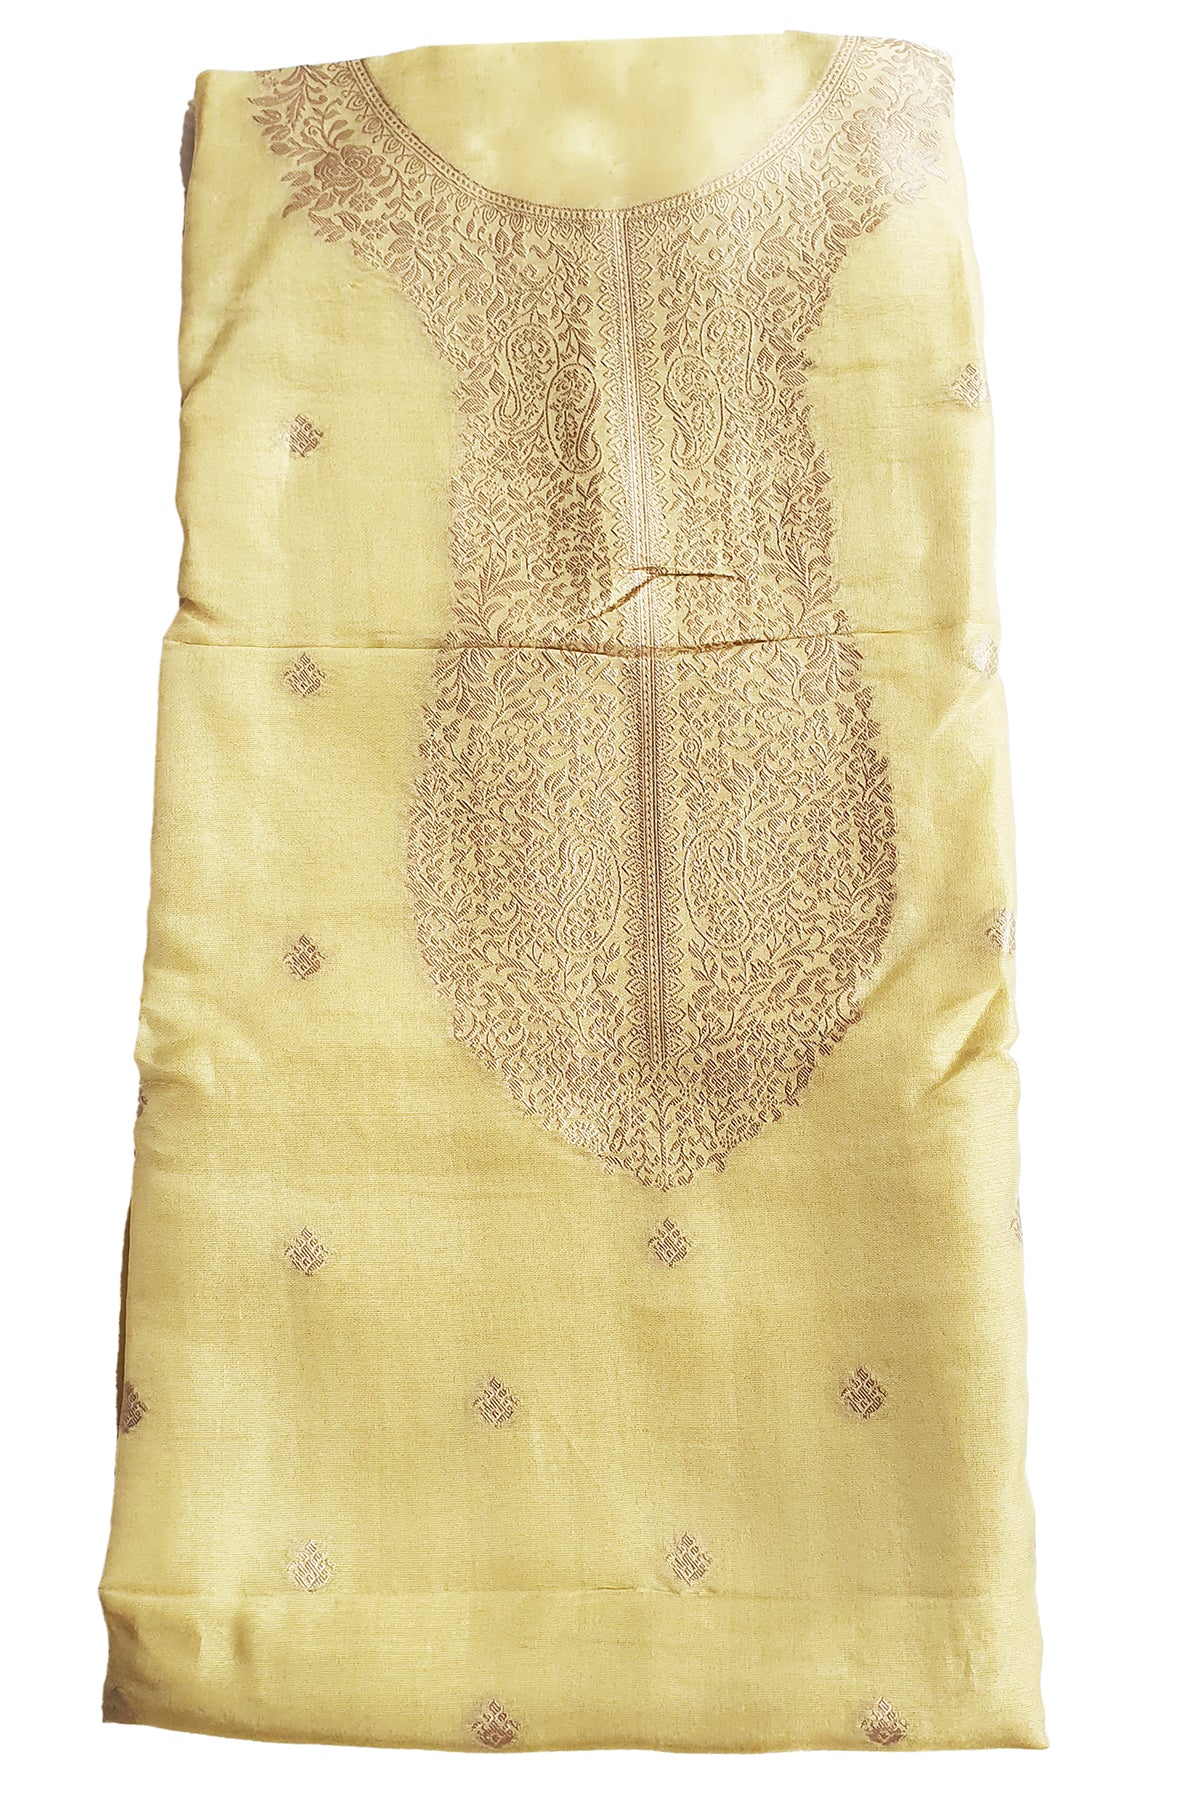 Mustard Tissue Zari Embroidered Suit